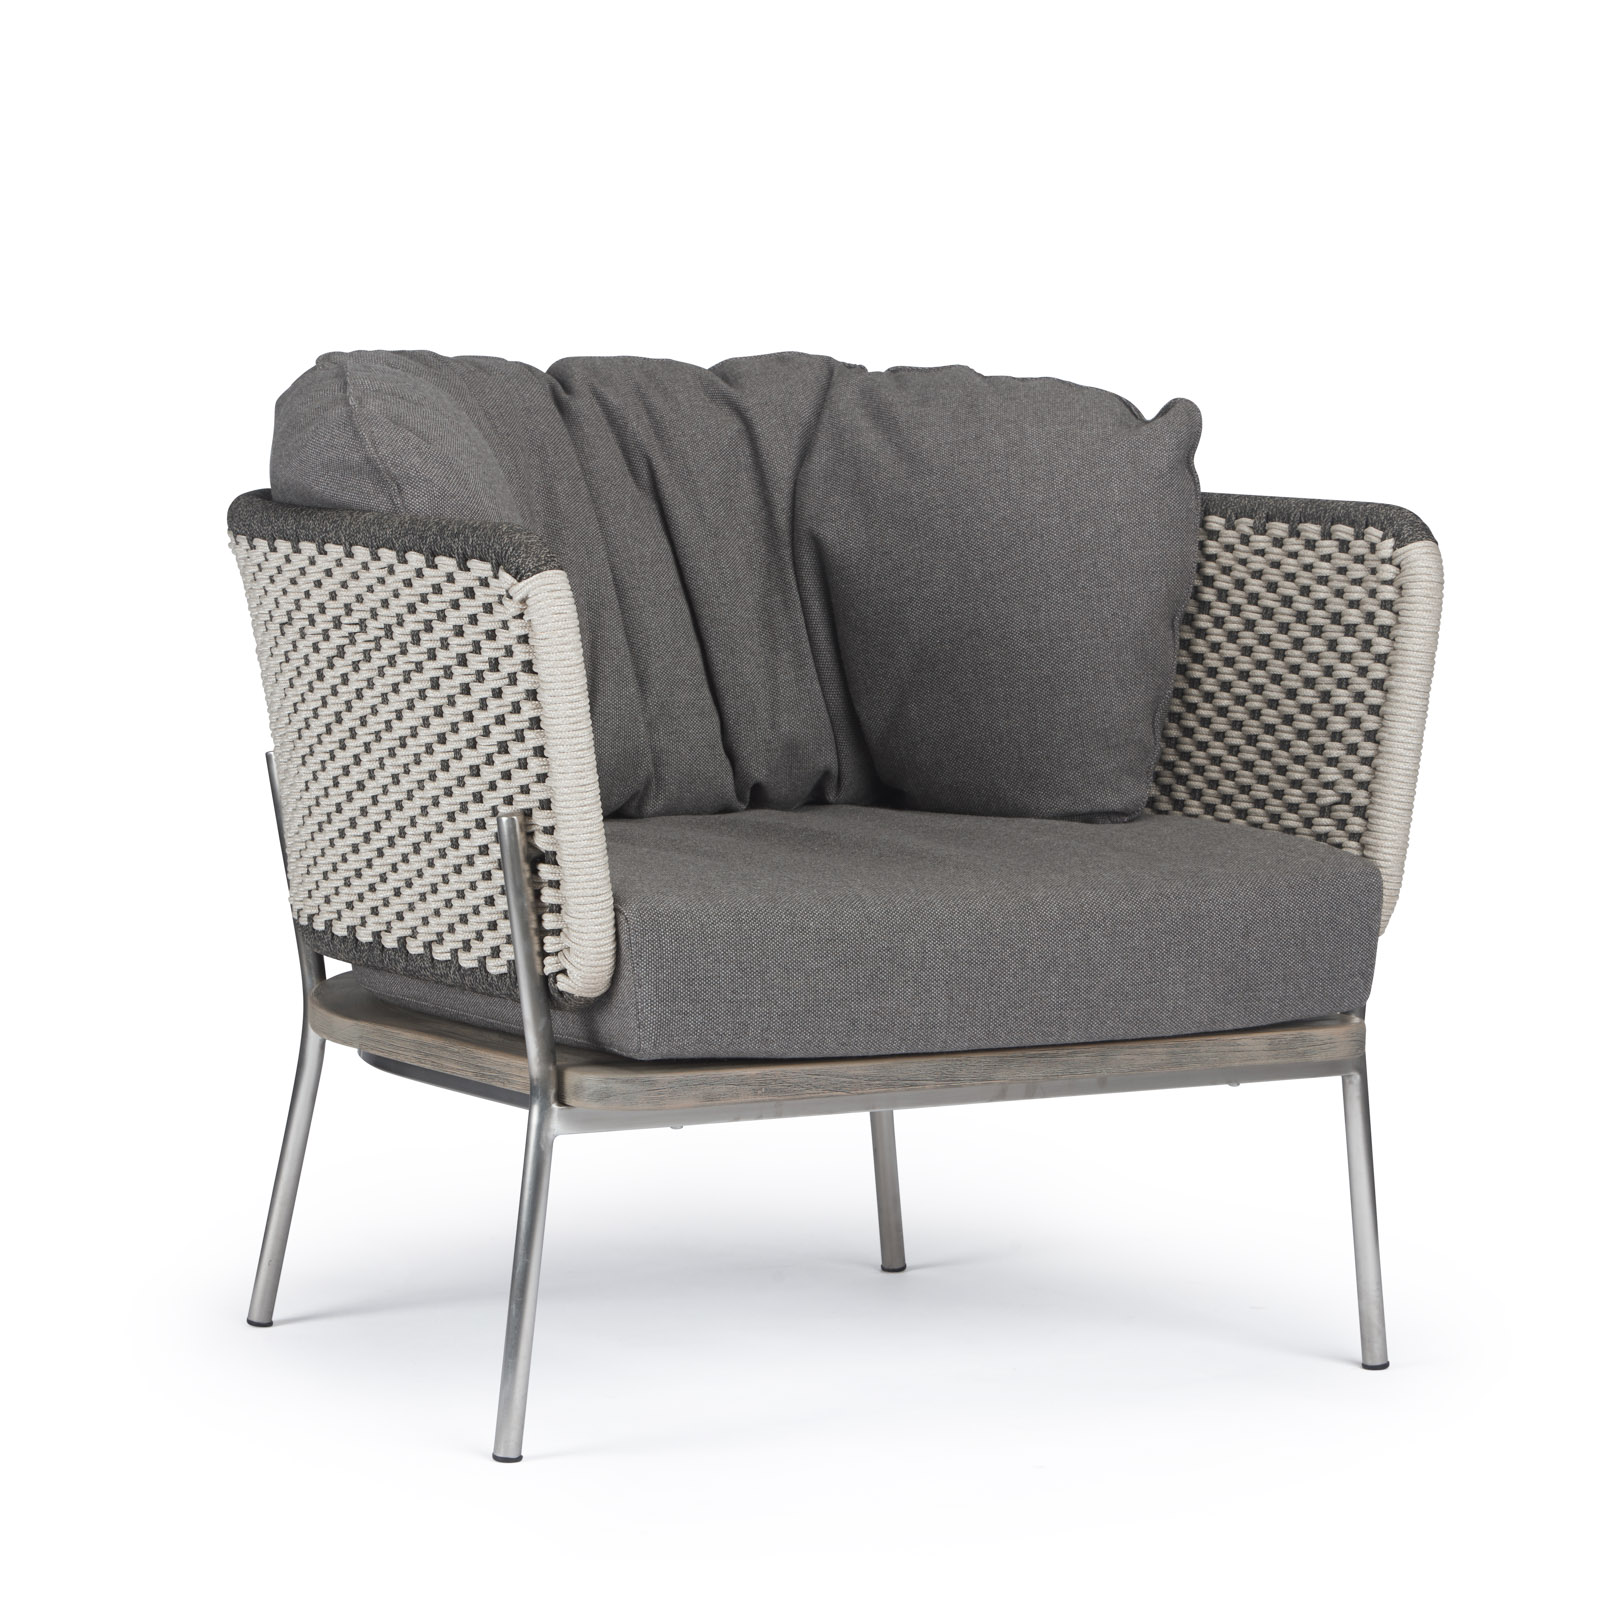 Studio Rope Relaxing Chair Two Tone Weave in Coal Gray | Teak